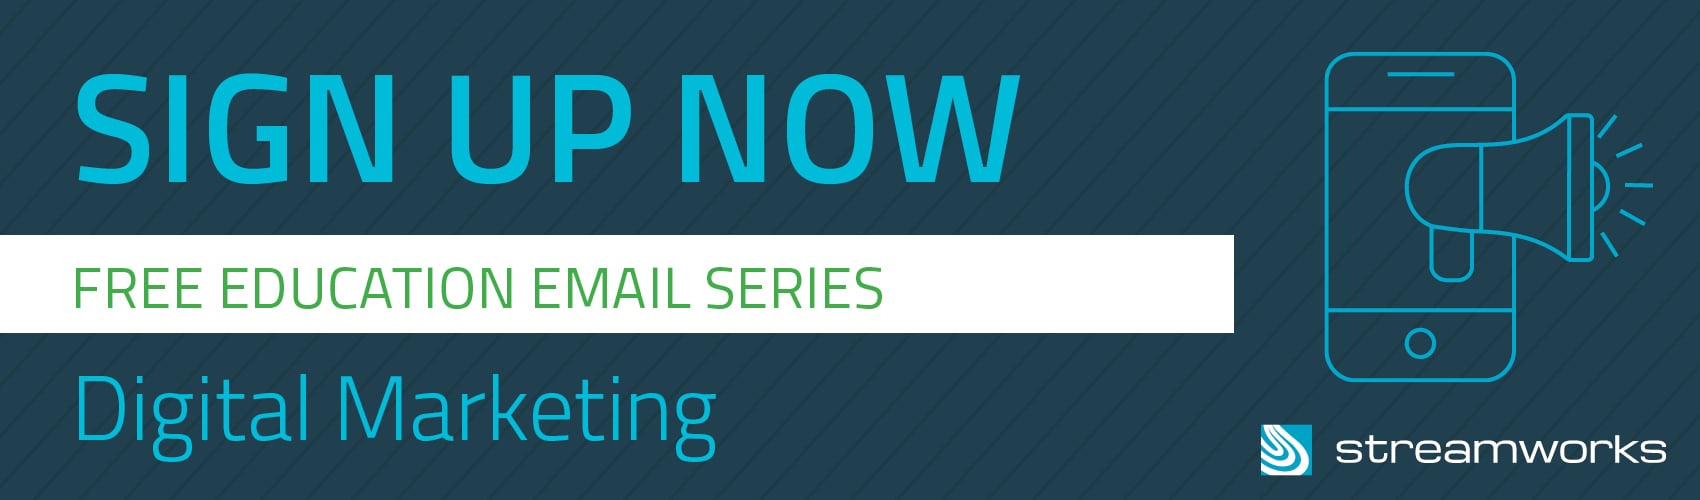 Free Email Series_Digital-Marketing